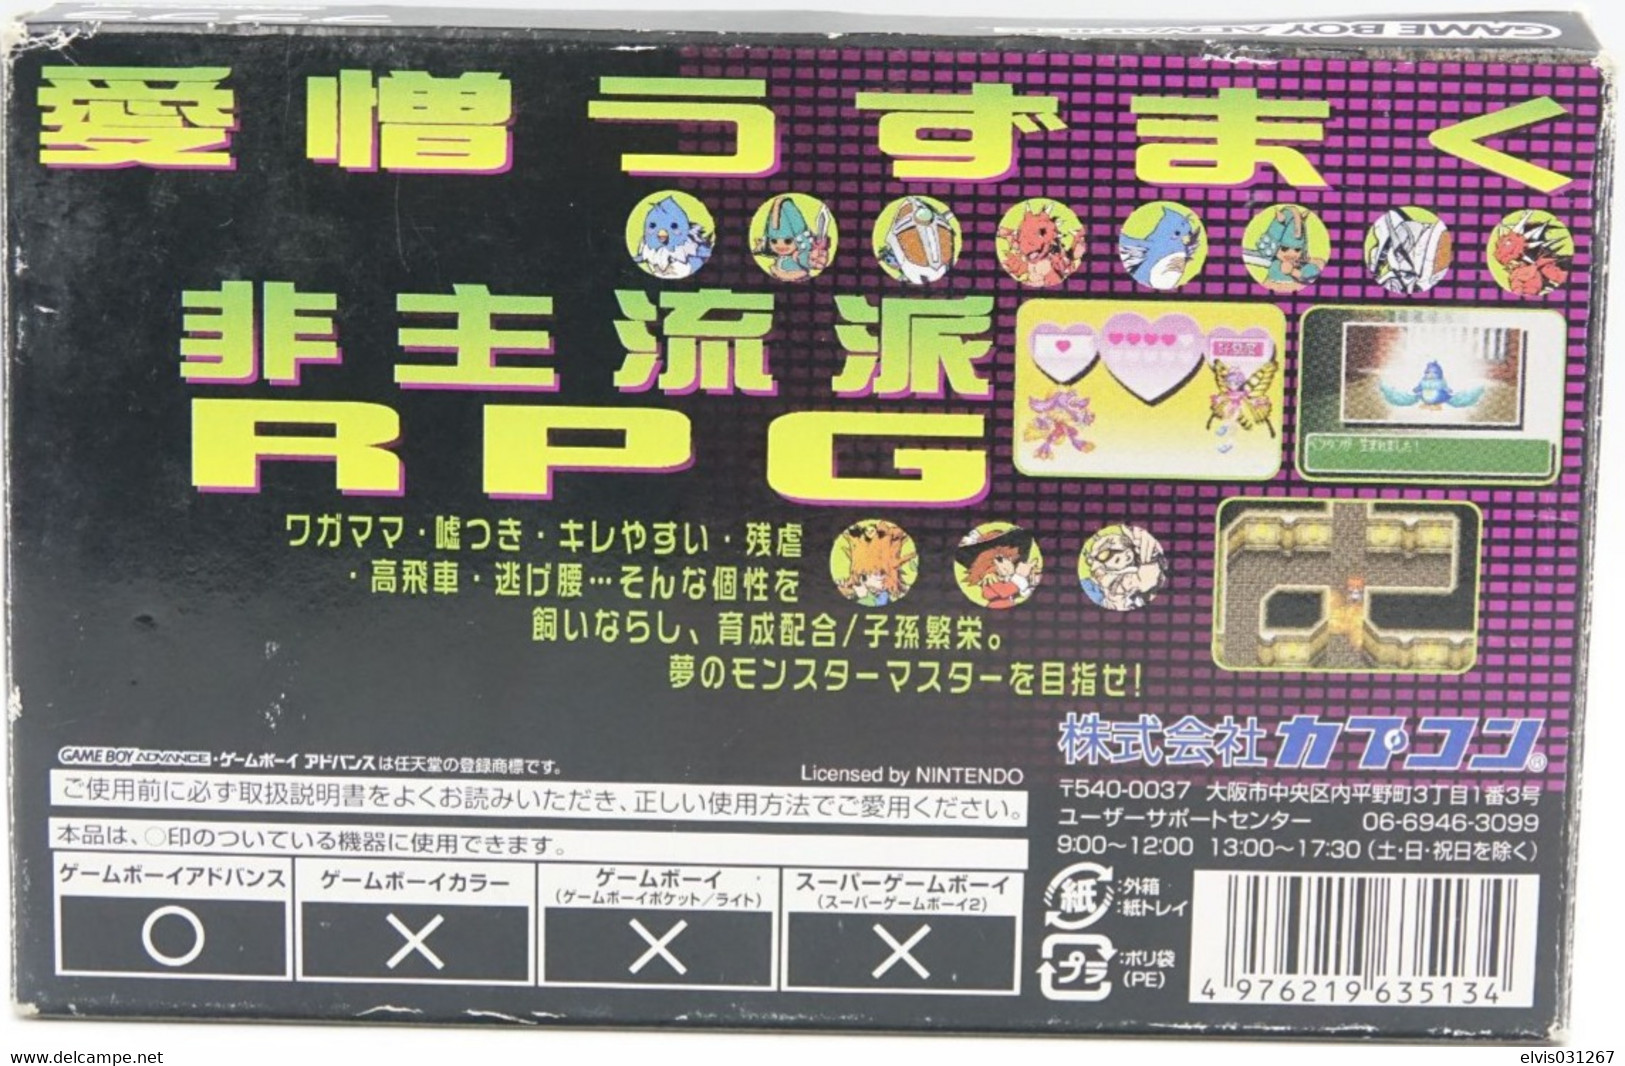 NINTENDO GAMEBOY ADVANCE: BLACK BLACK DANGLE - JAP - CAPCOM - 2002 - Game Boy Advance